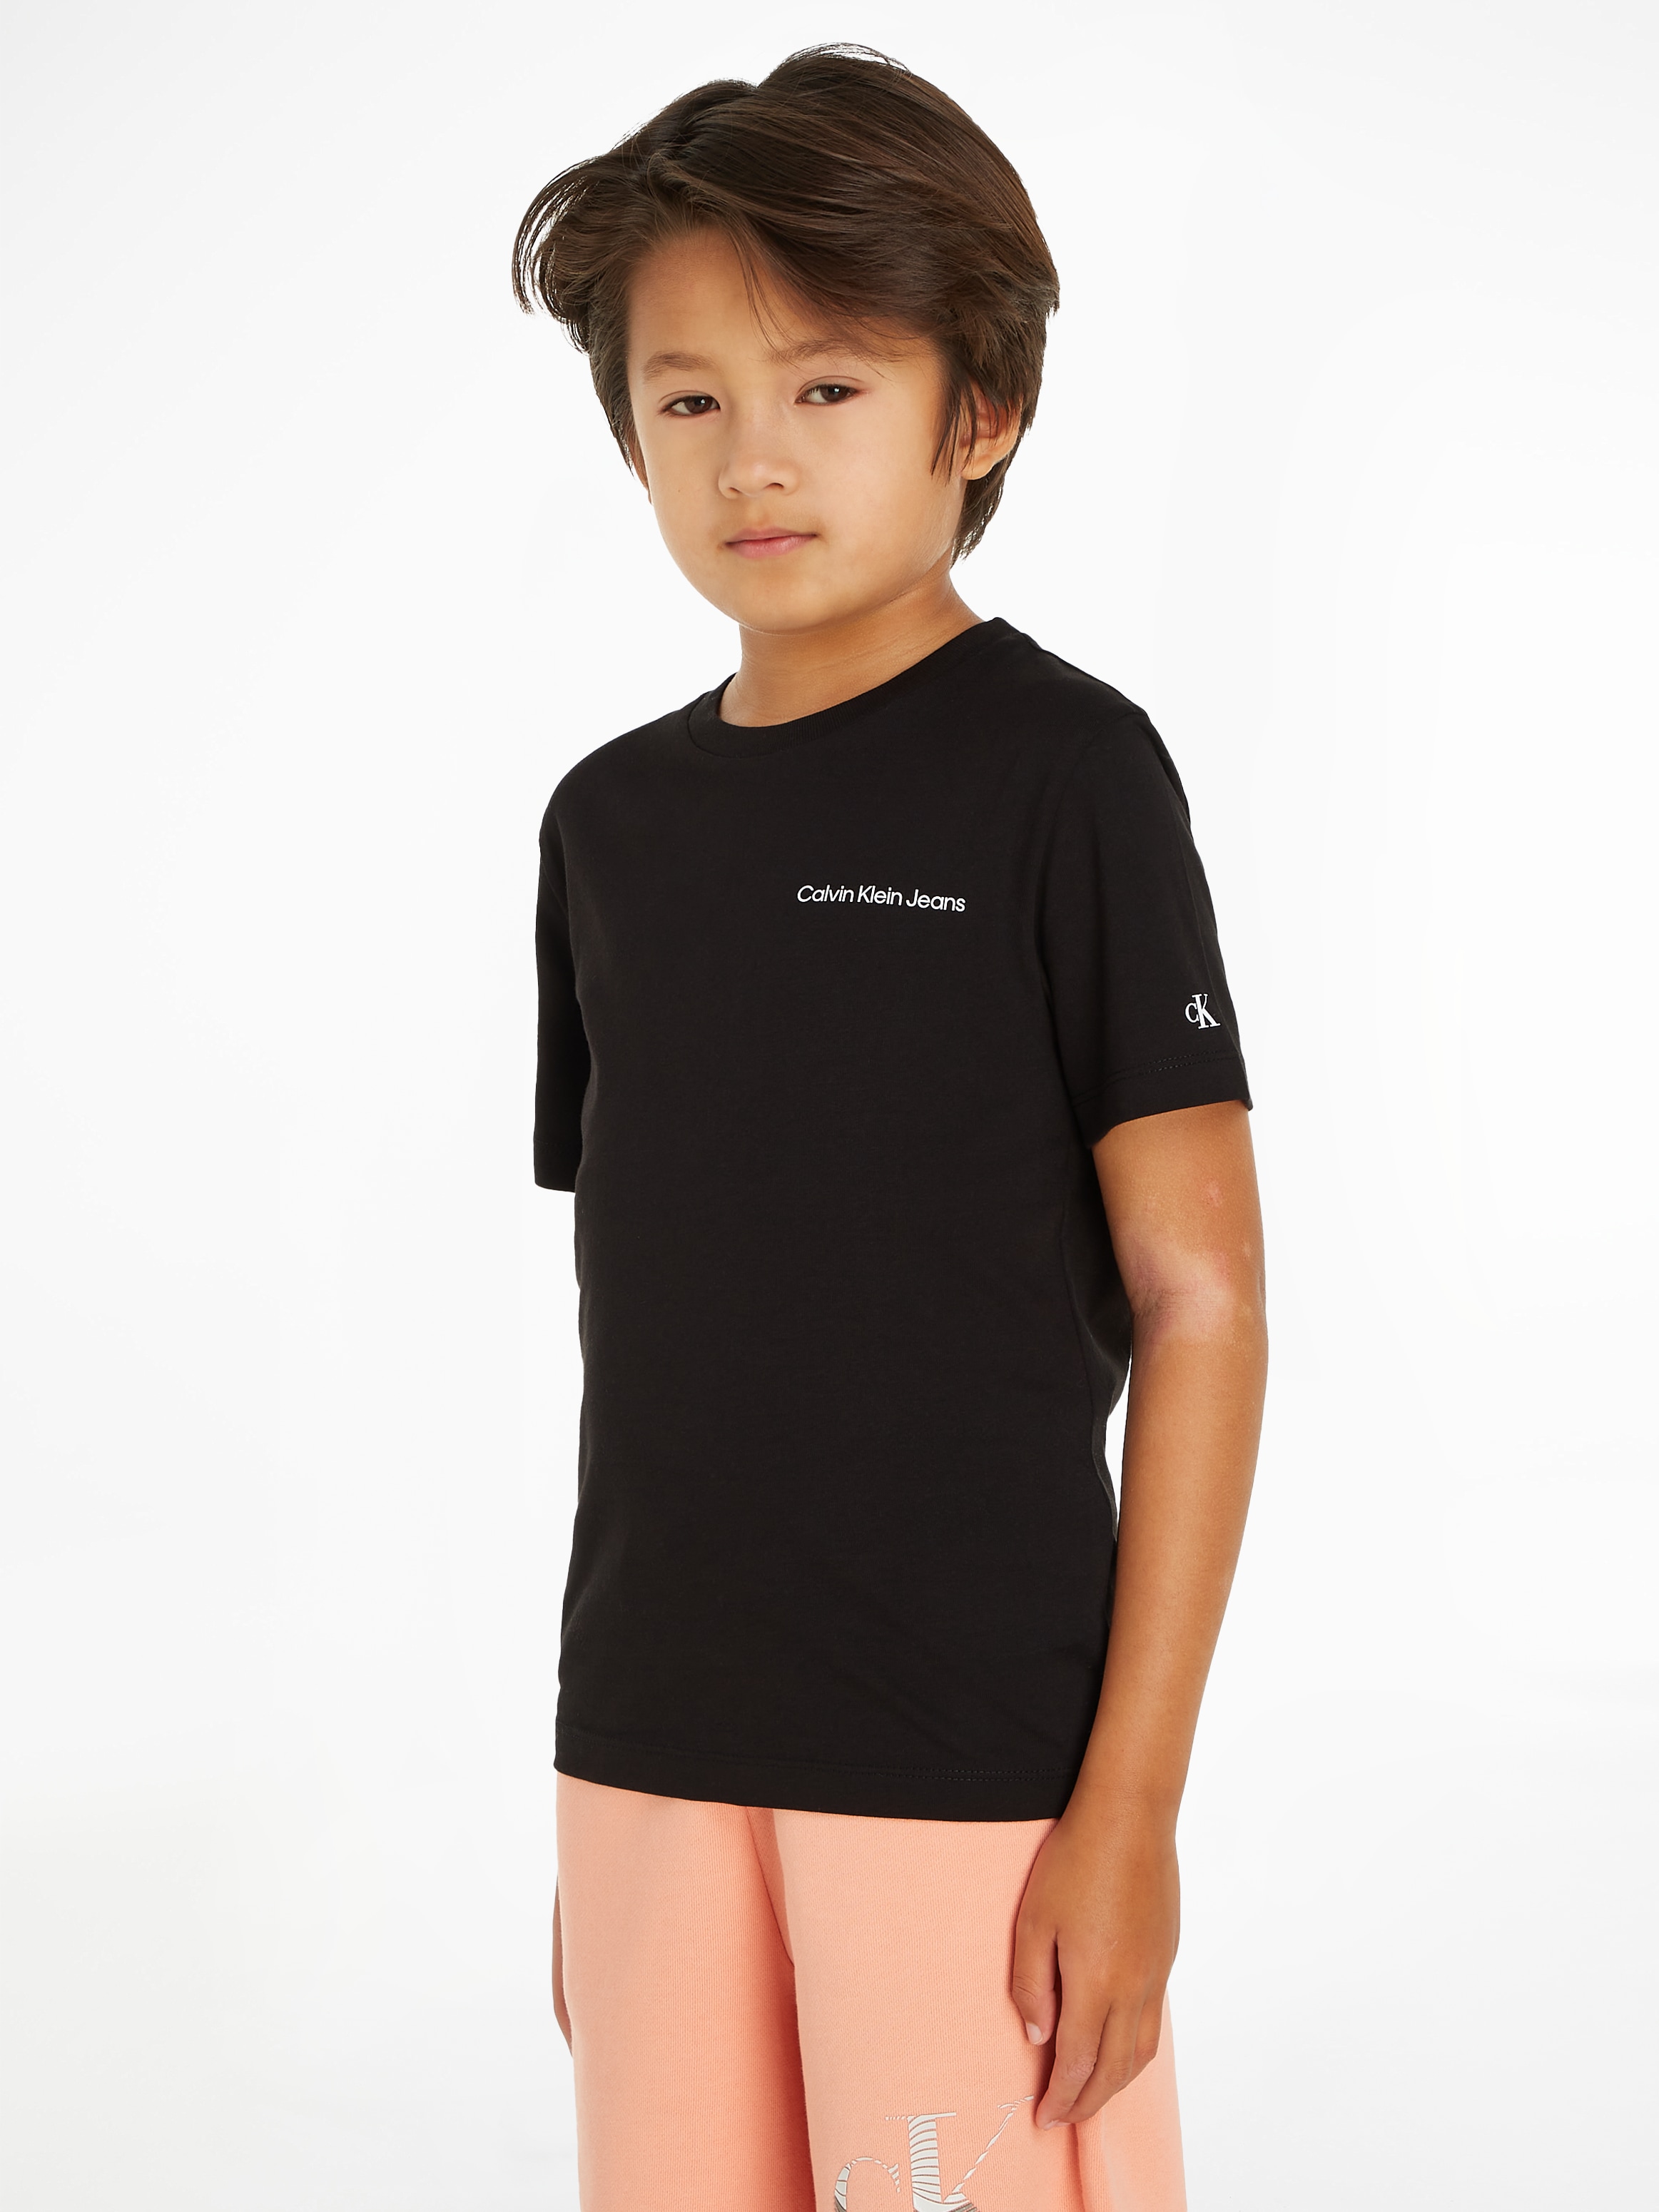 Logodruck T-Shirt Klein INST. »CHEST online Jeans Calvin T-SHIRT«, SS shoppen mit LOGO